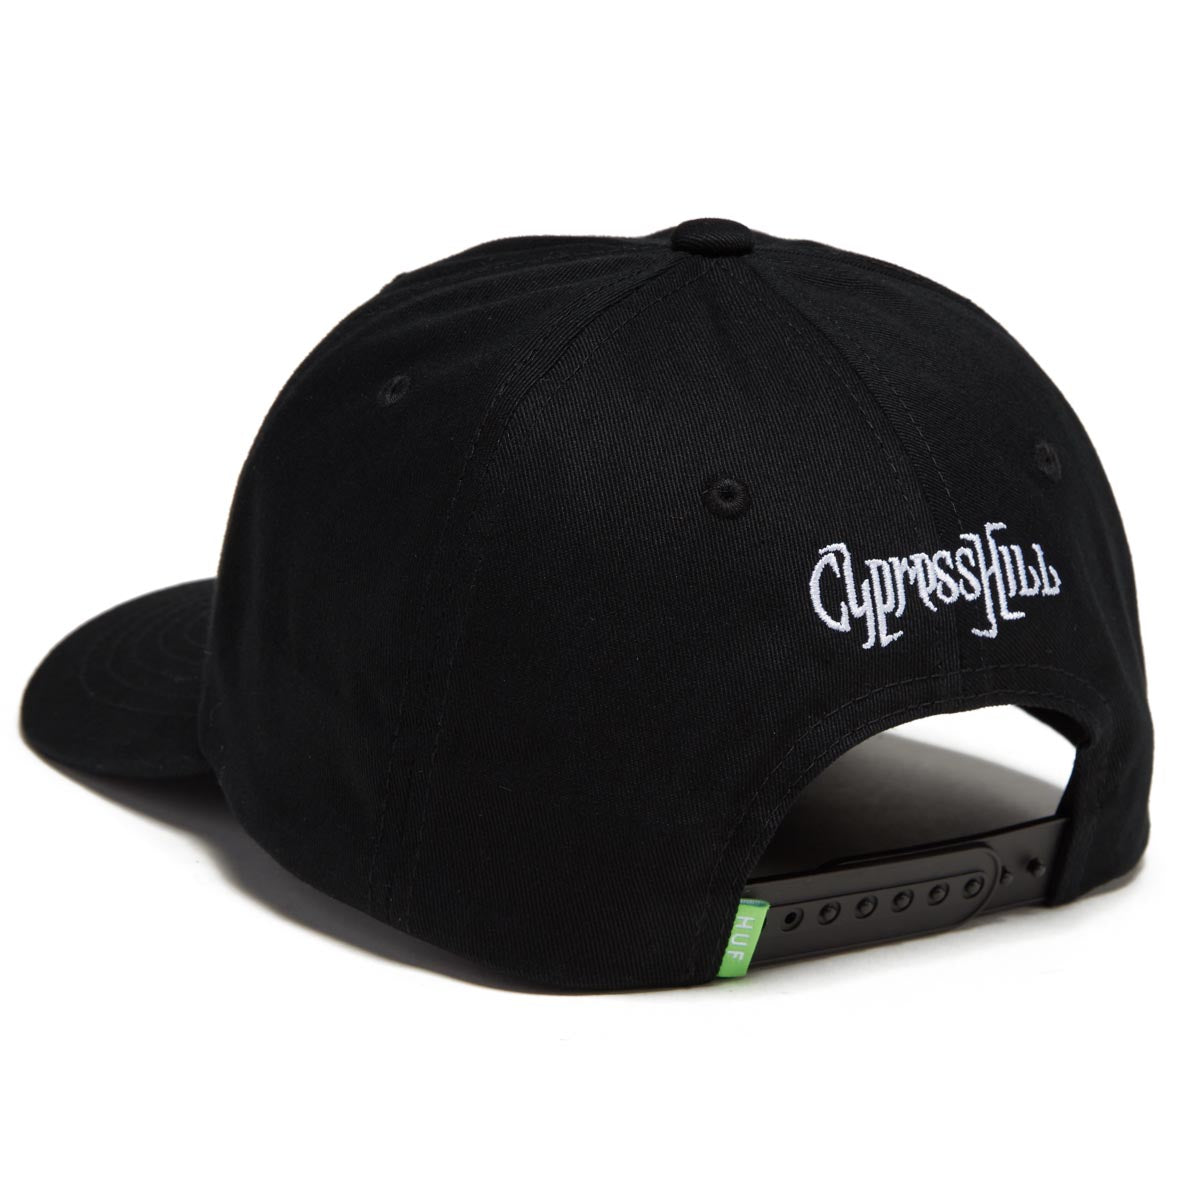 Huf x Cypress Hill Insane Snapback Hat - Black image 2